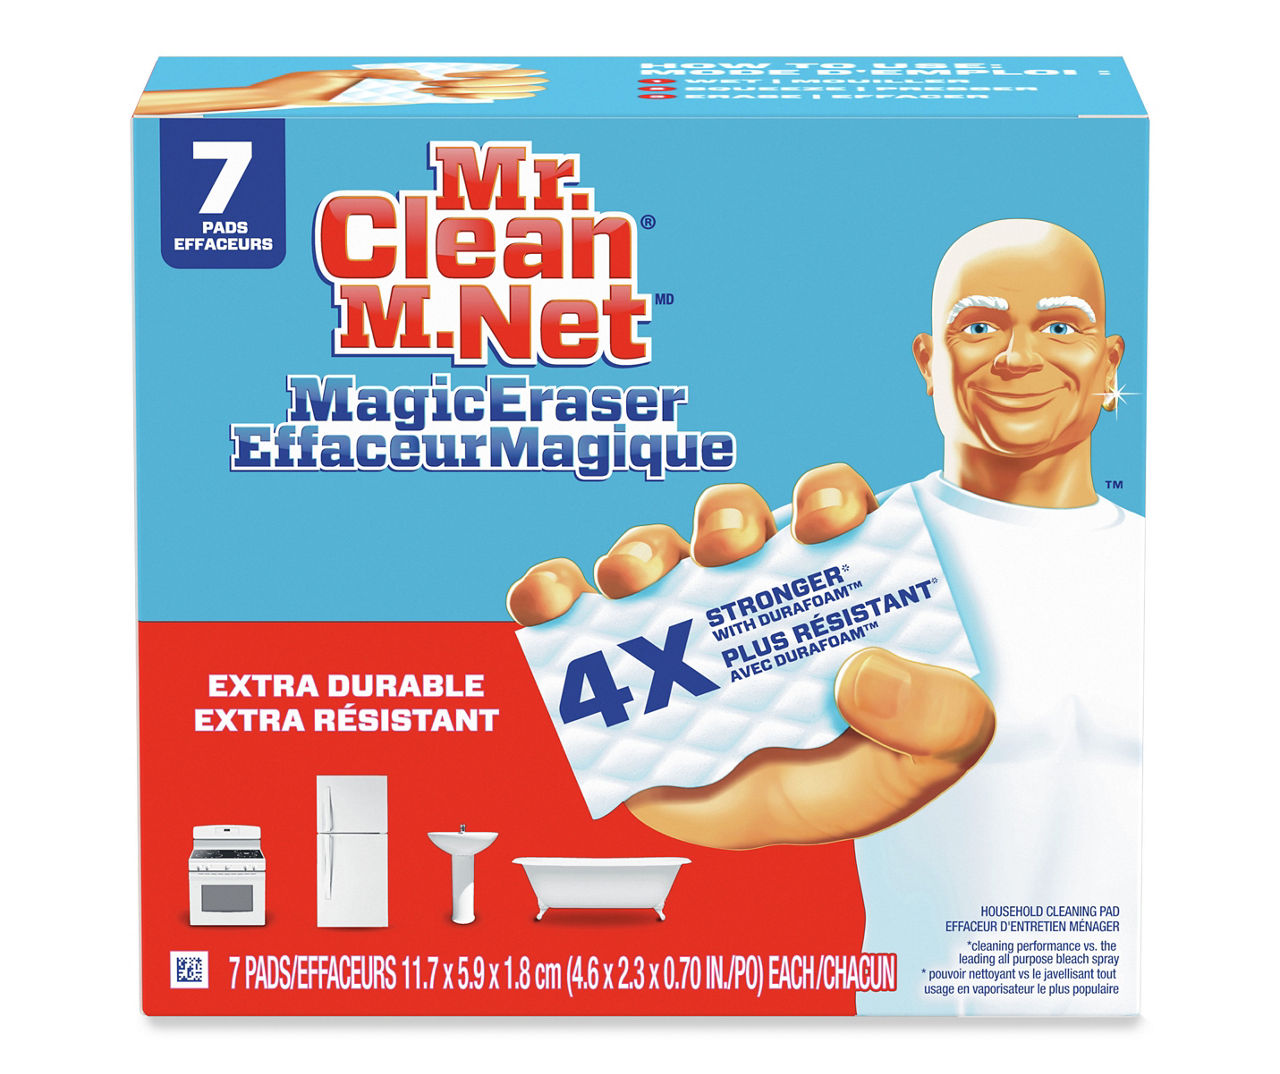 Mr. Clean Magic Eraser Original, Cleaning Pads with Durafoam, 9 Ct